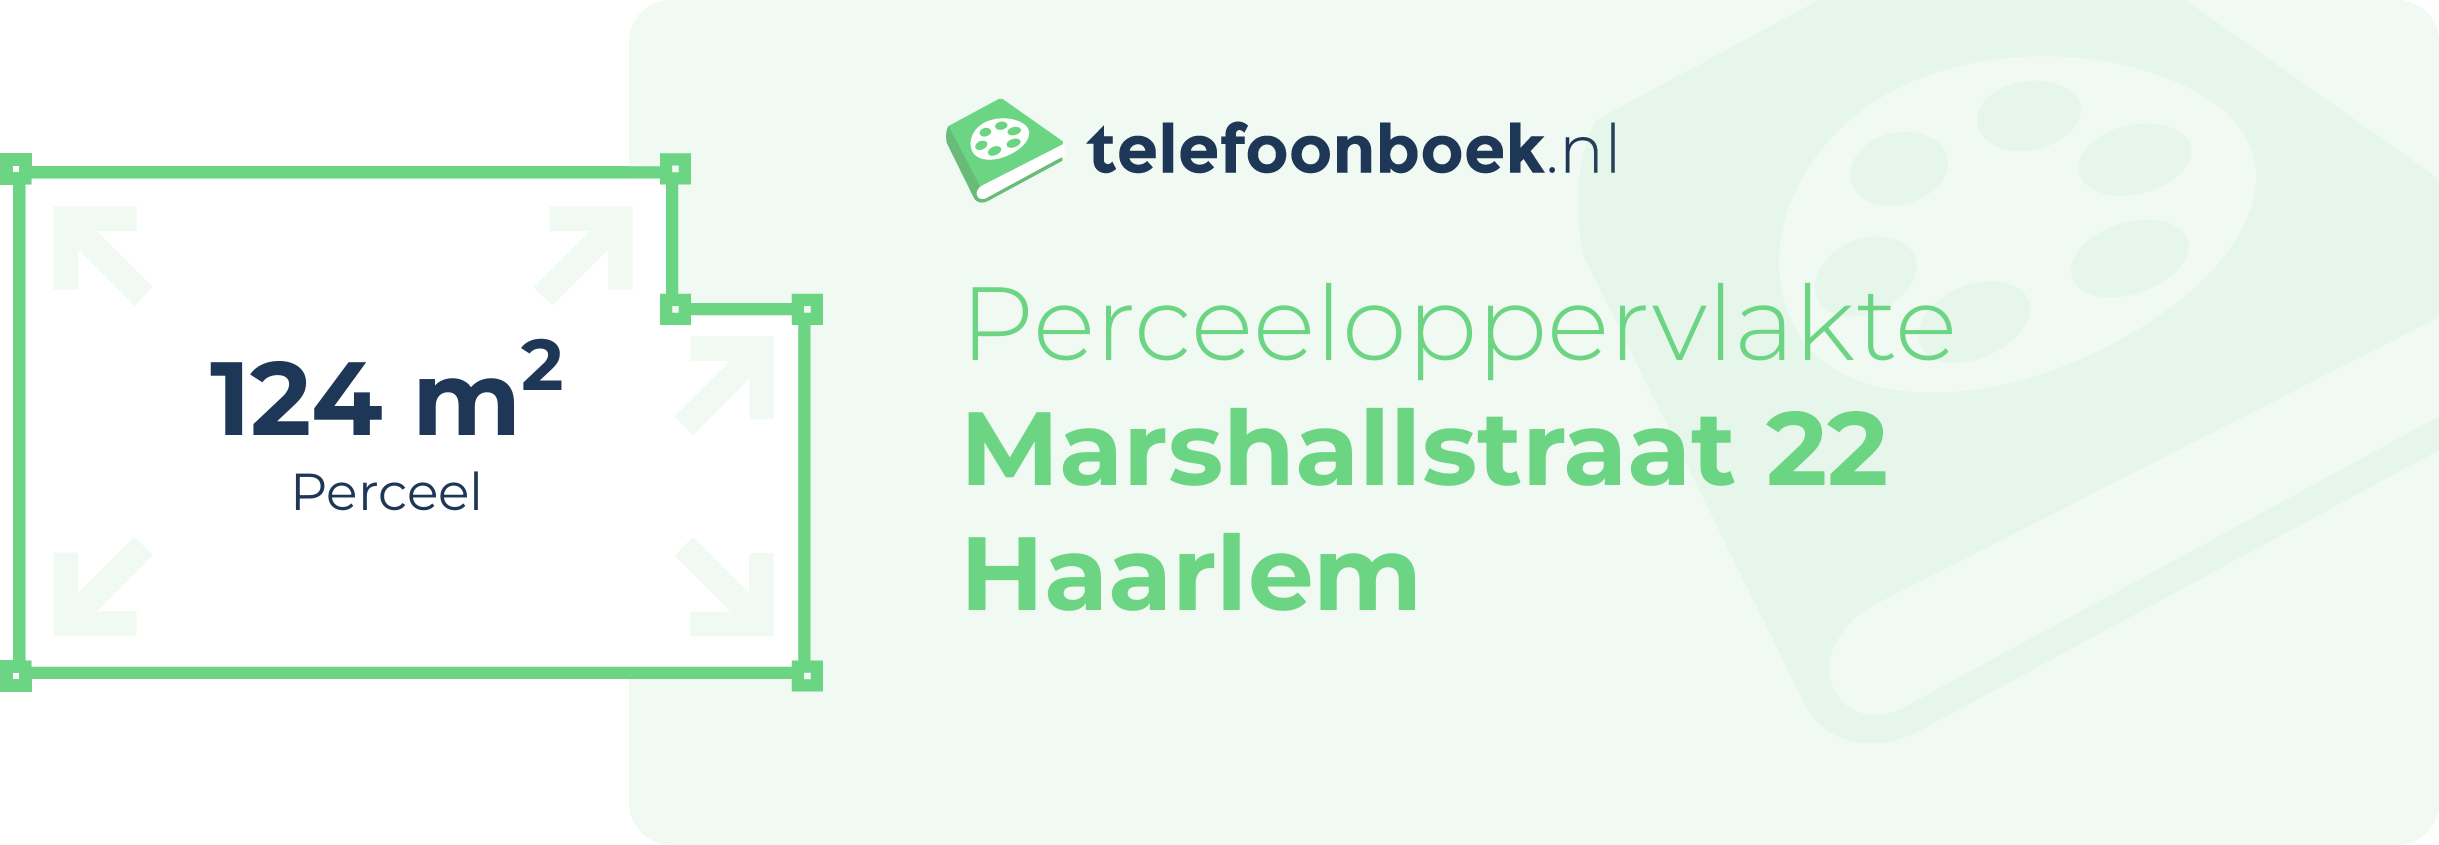 Perceeloppervlakte Marshallstraat 22 Haarlem